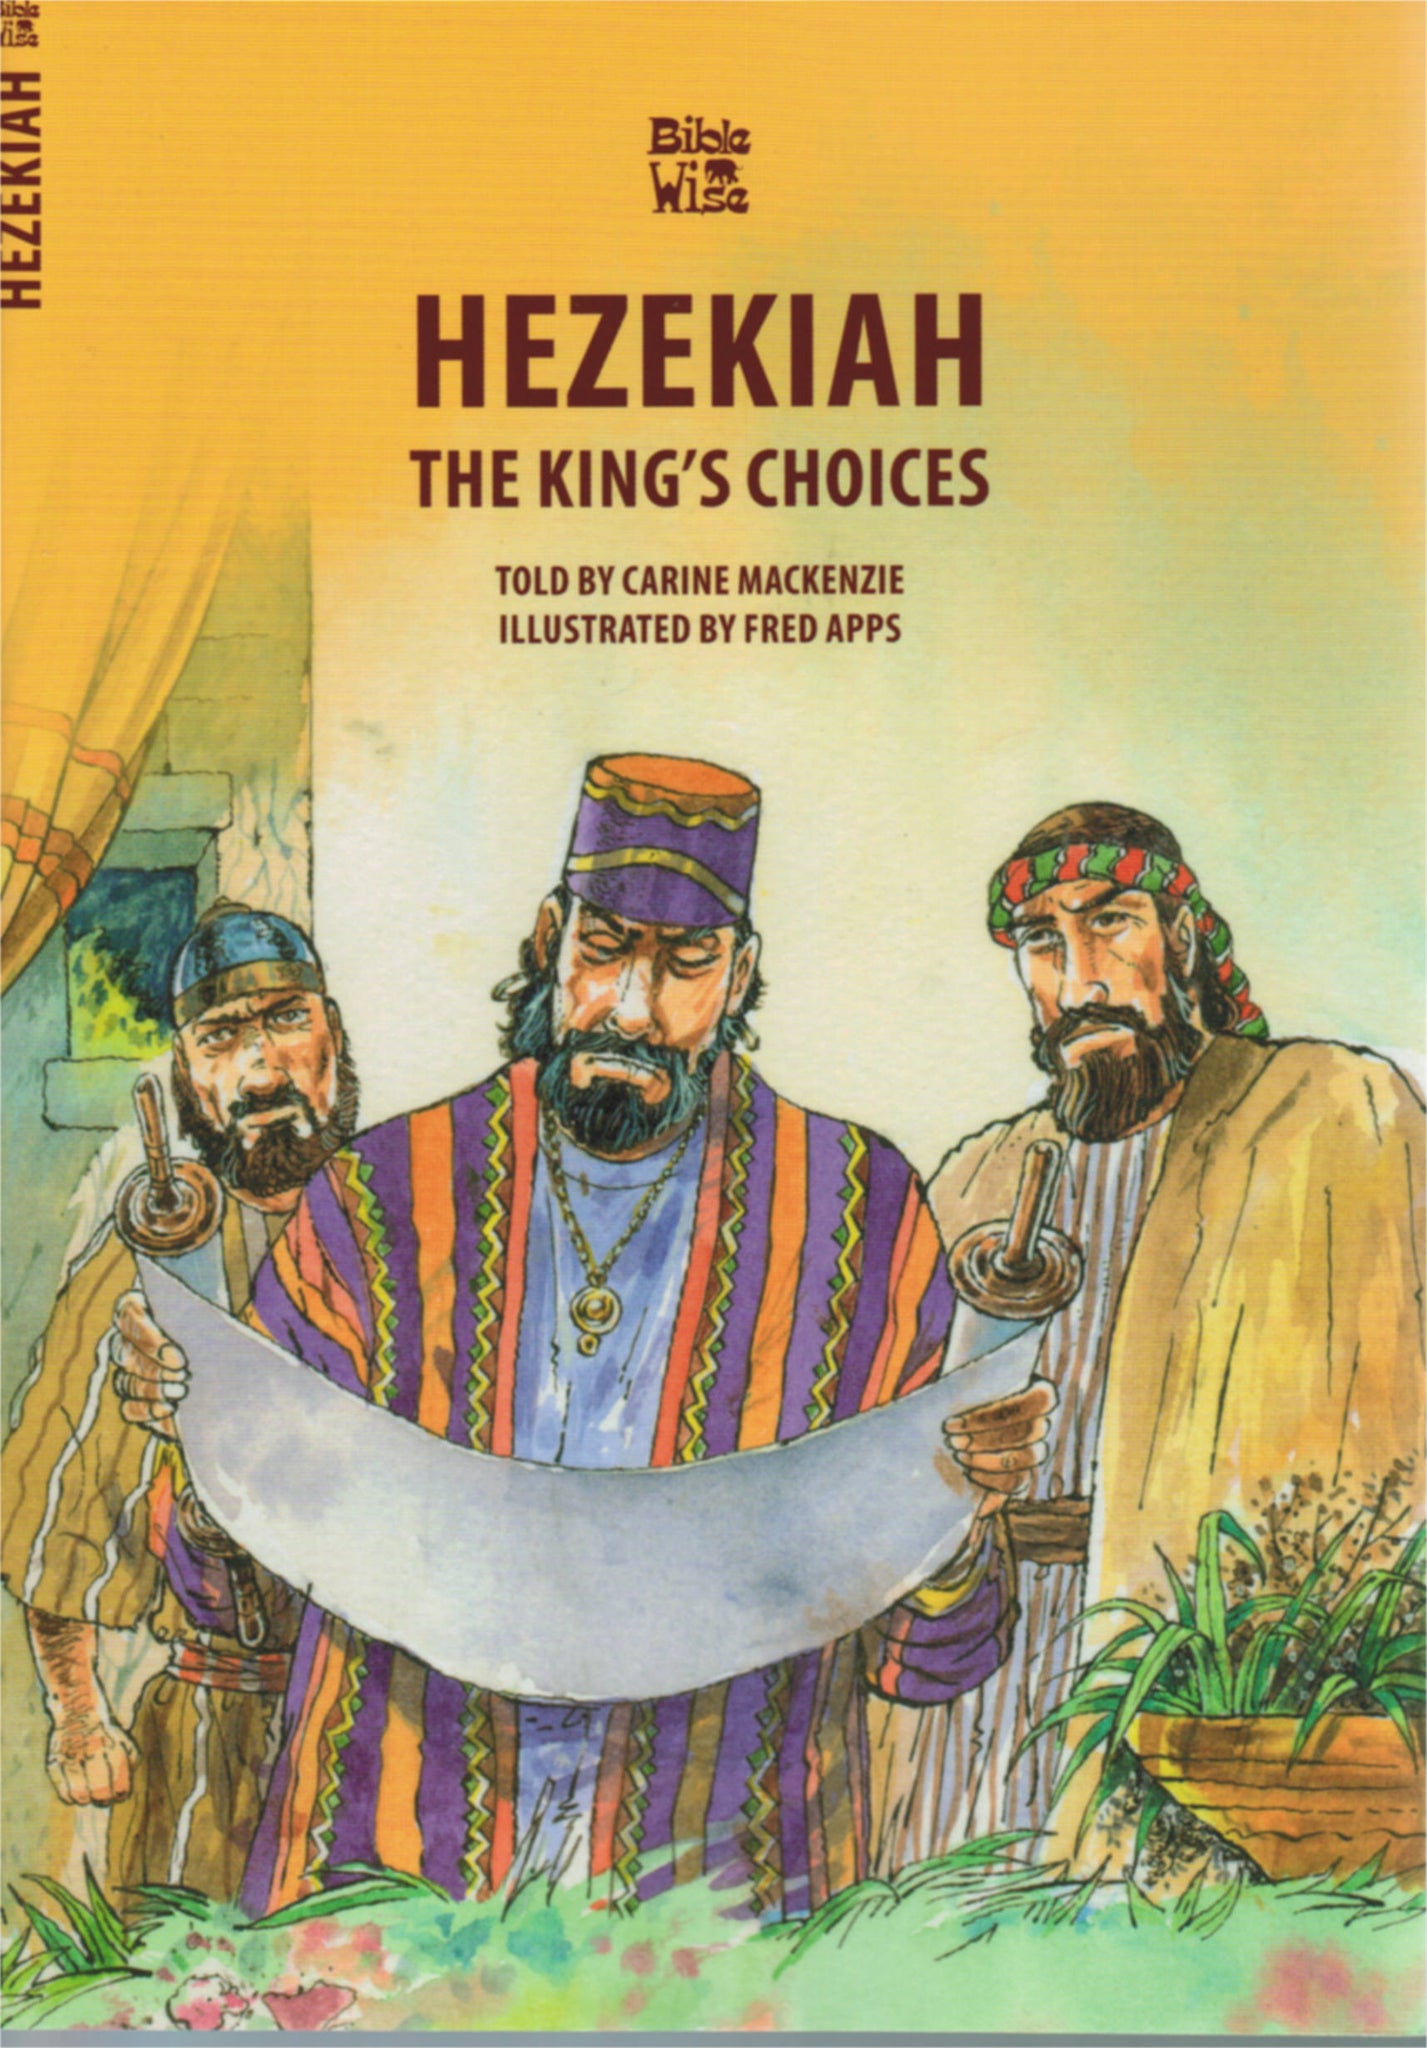 BibleWise - Hezekiah The King's Choices